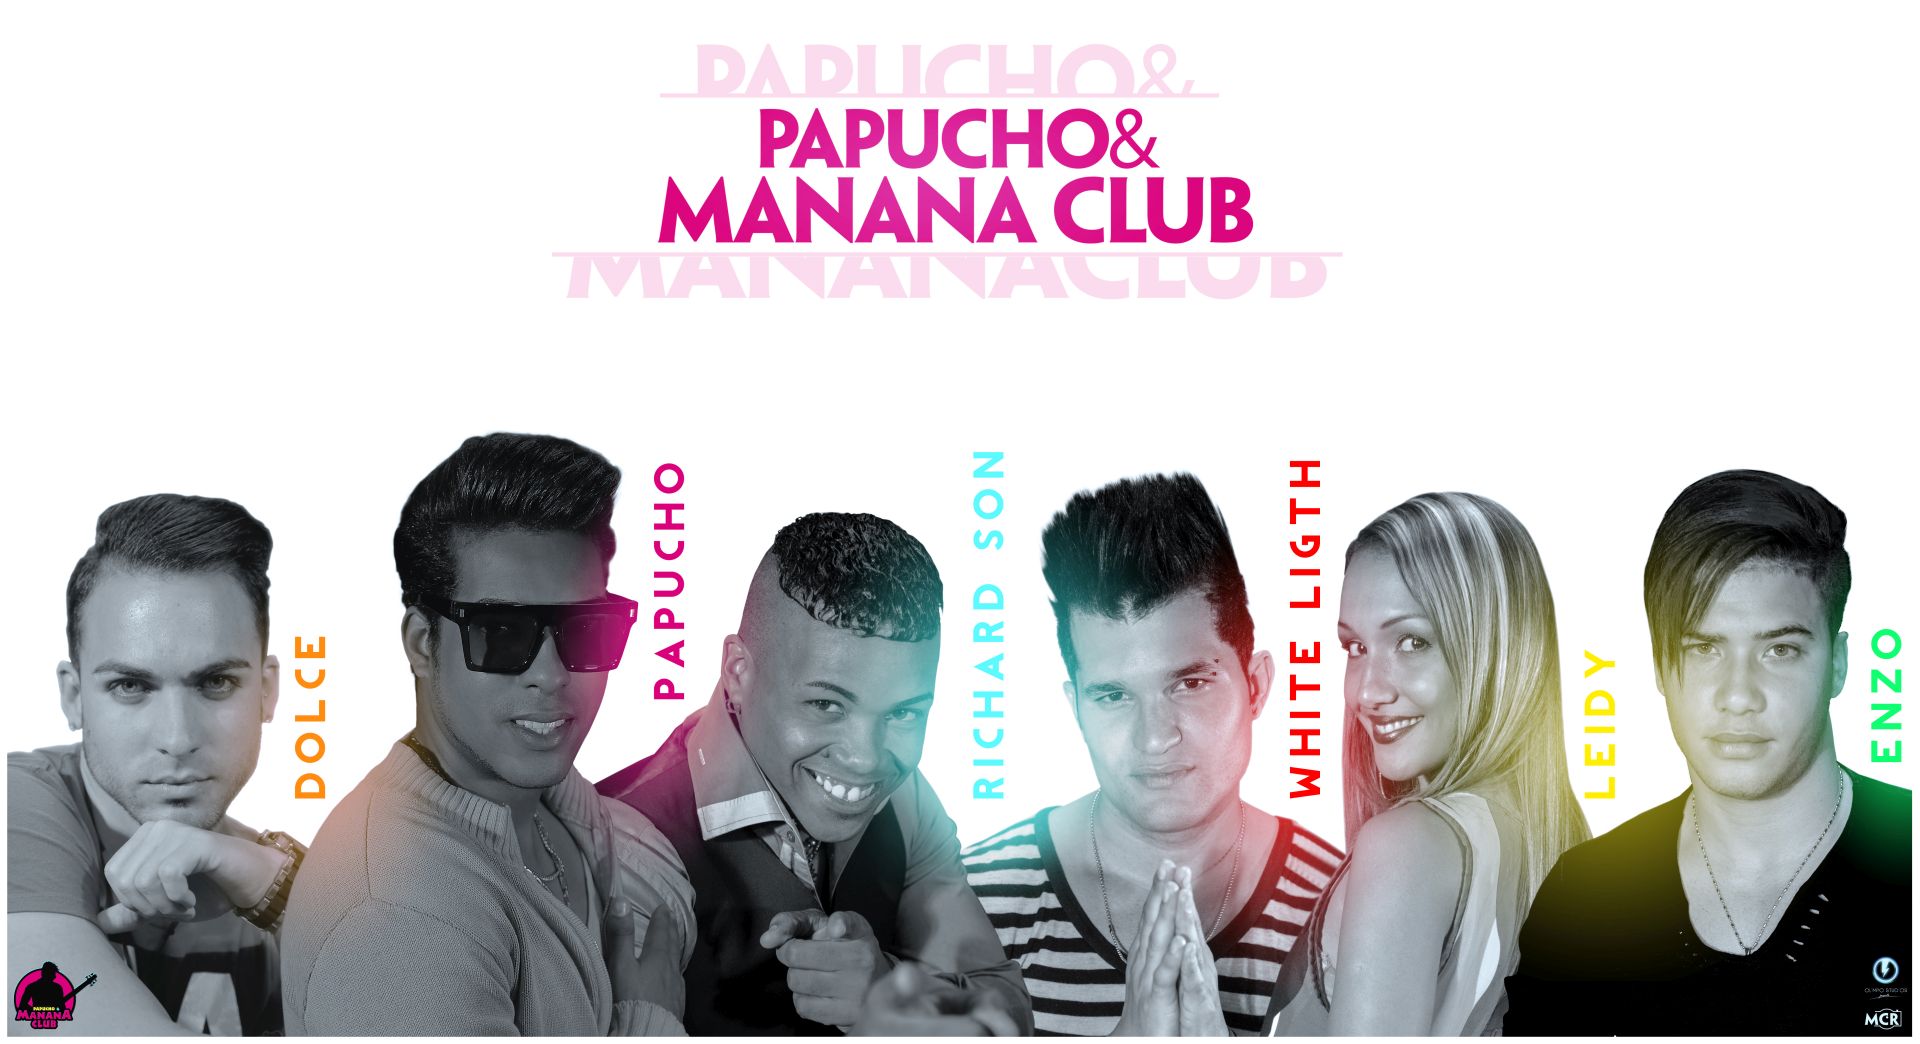 Manana Club Y Papucho_000 b.jpg